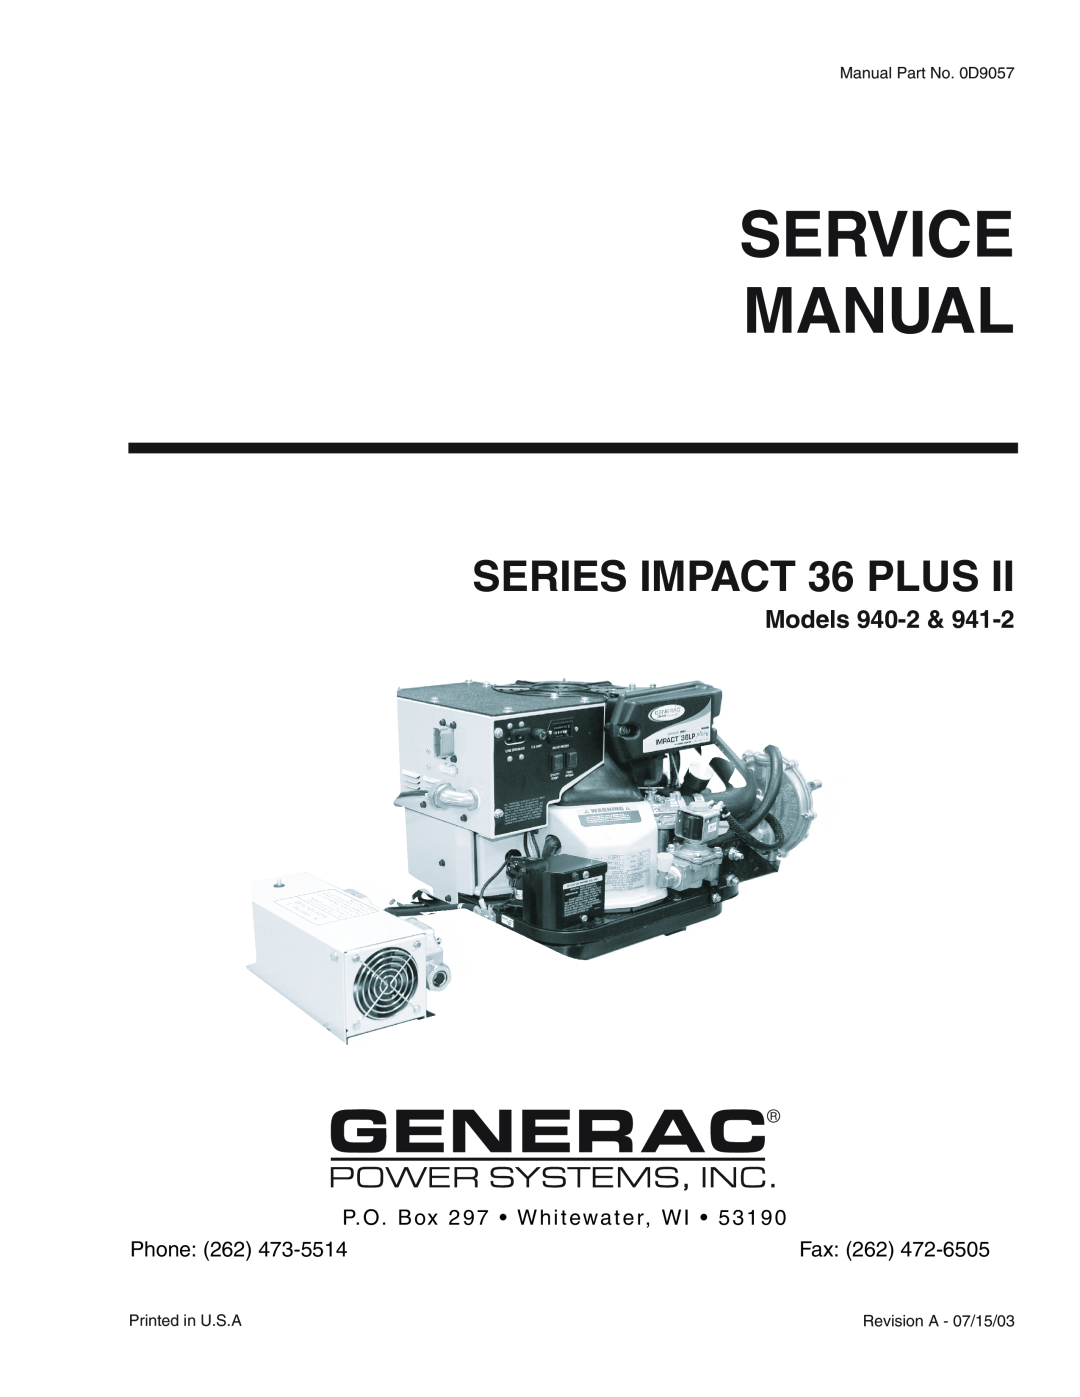 Generac Power Systems 941-2 service manual Models 940-2, Service Manual, SERIES IMPACT 36 PLUS, Phone, Fax 262 